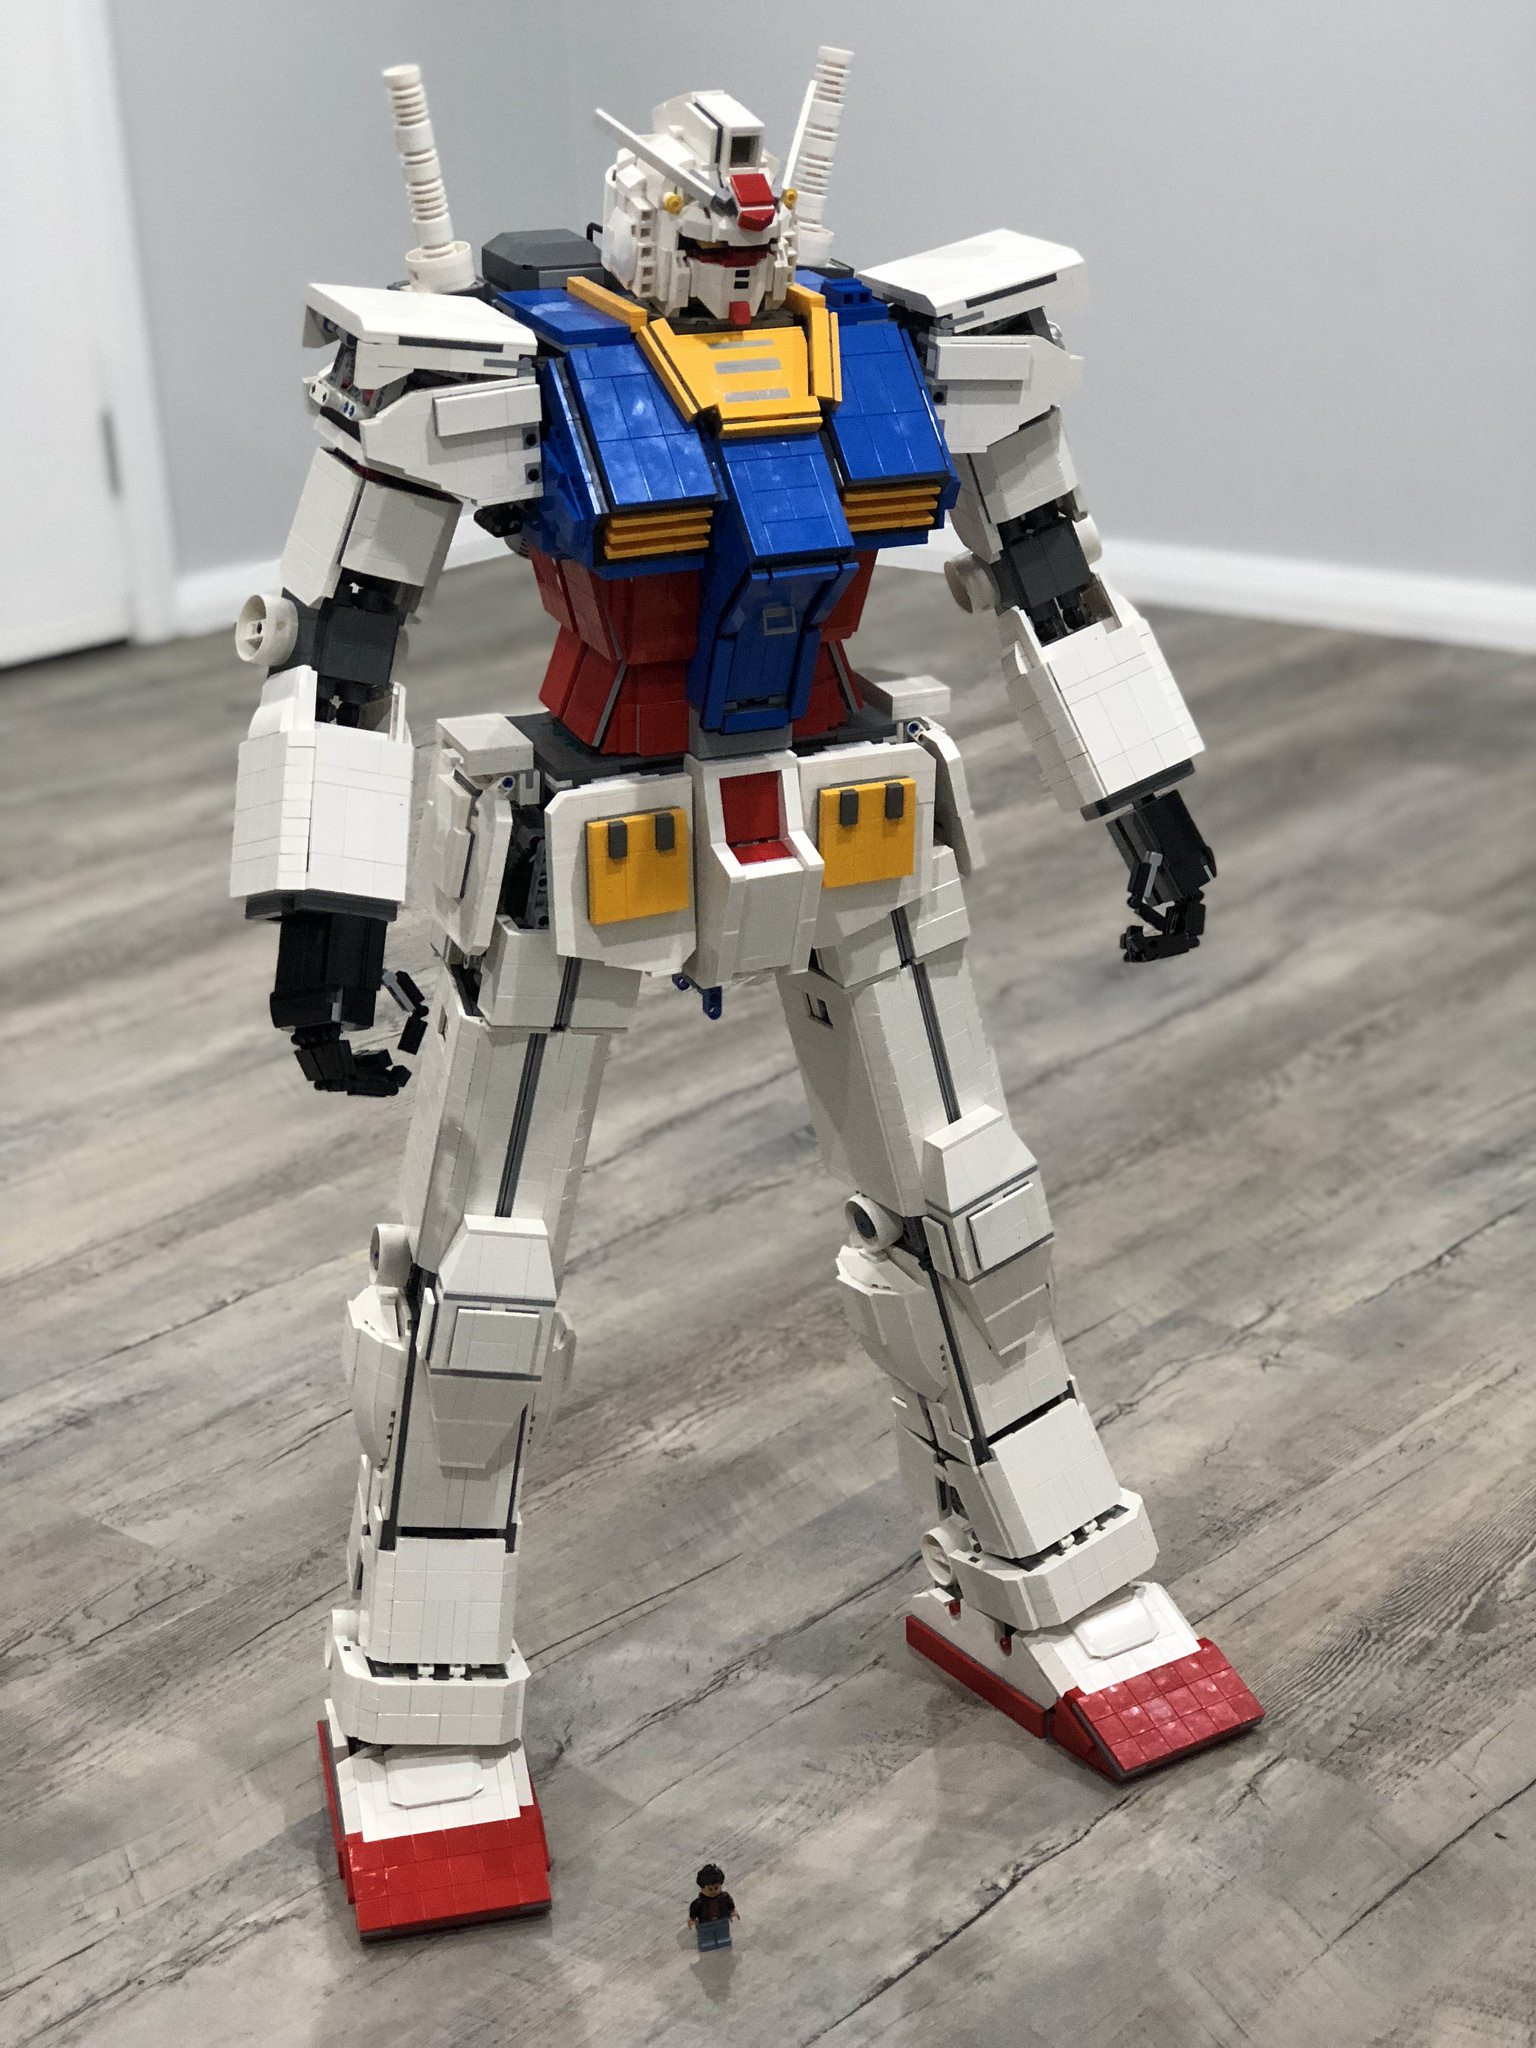 Vedligeholdelse afregning aflevere Robert Wilson IV on Twitter: "100% Lego, minifig scale, RX-78-2 Gundam by  the brick god, Henry Pinto. It's just... it's just so beautiful.  https://t.co/kpEBCdZkcG" / Twitter